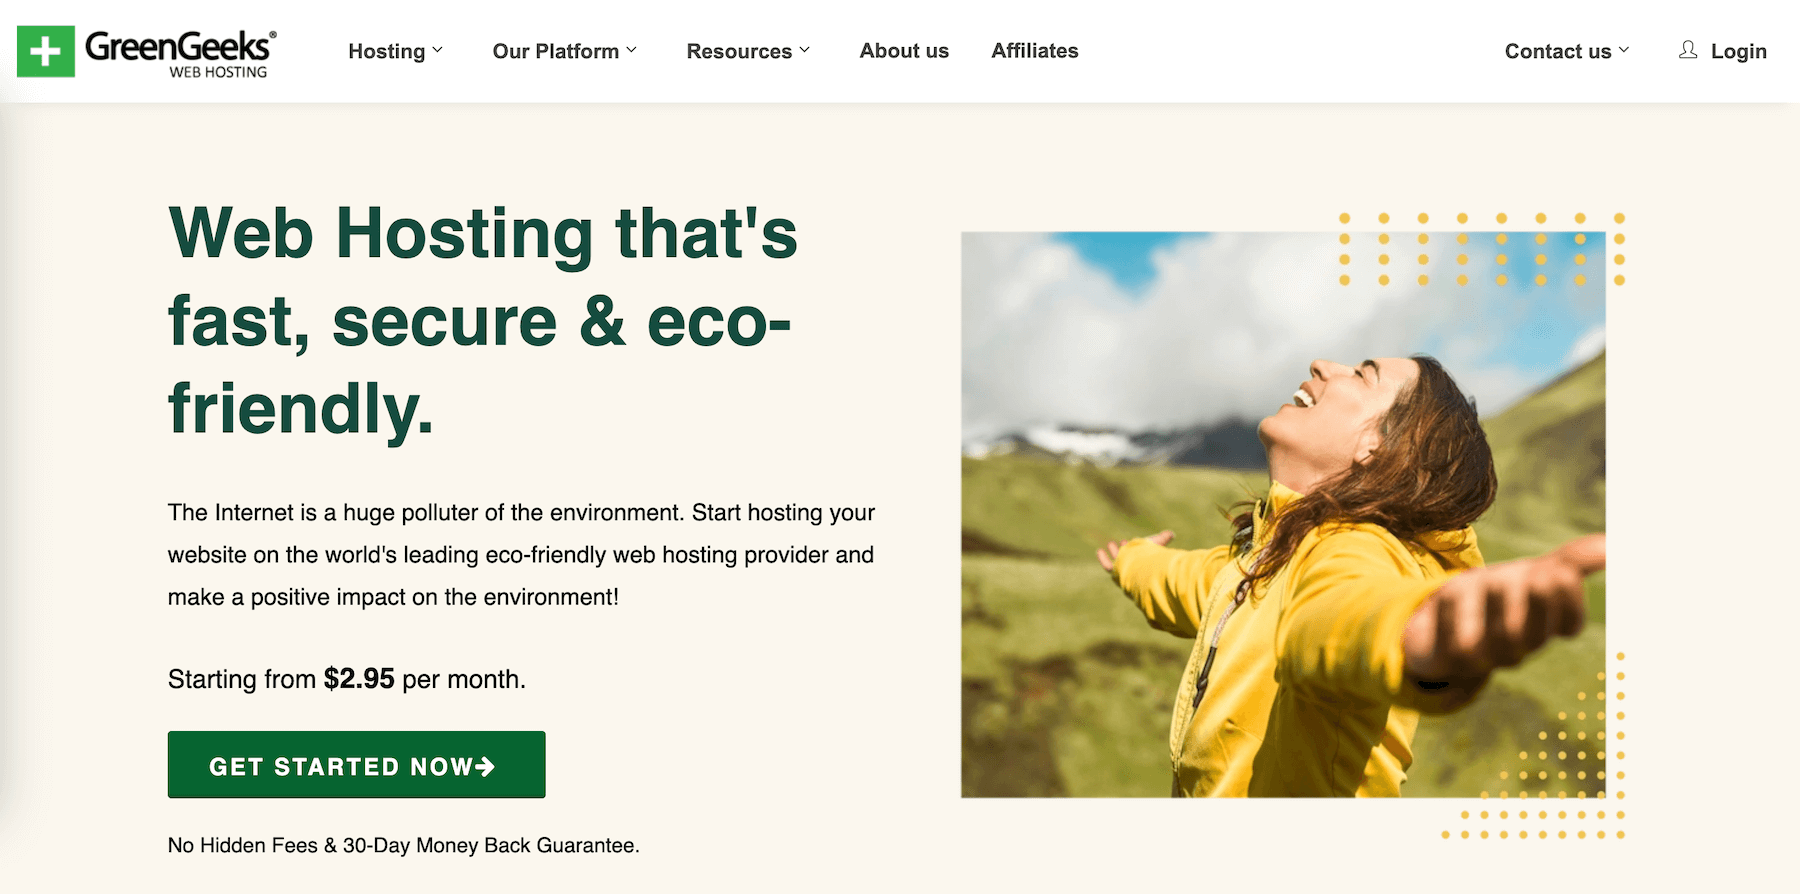 The GreenGeeks website.